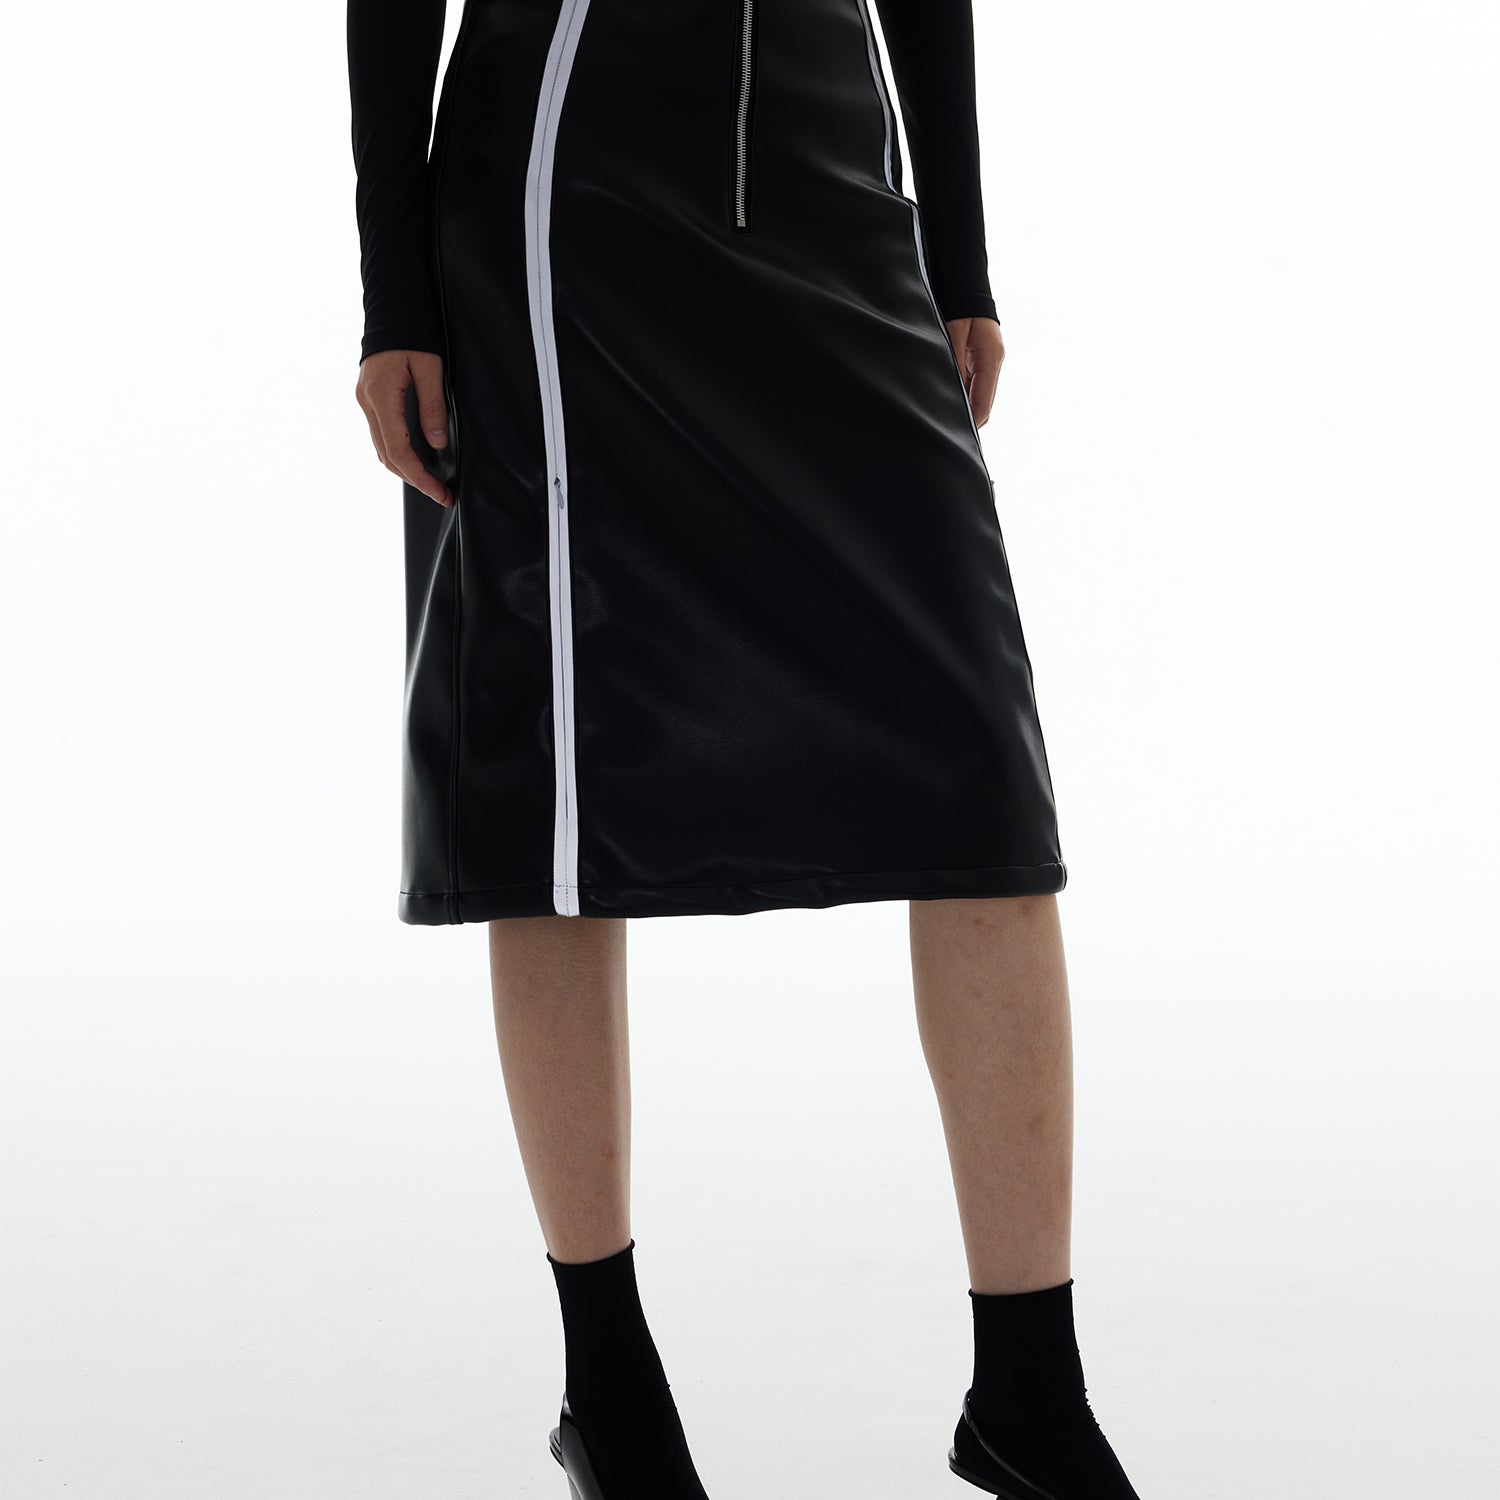 Reflective Leather Midi Skirt Stylish Slim Fit for Women